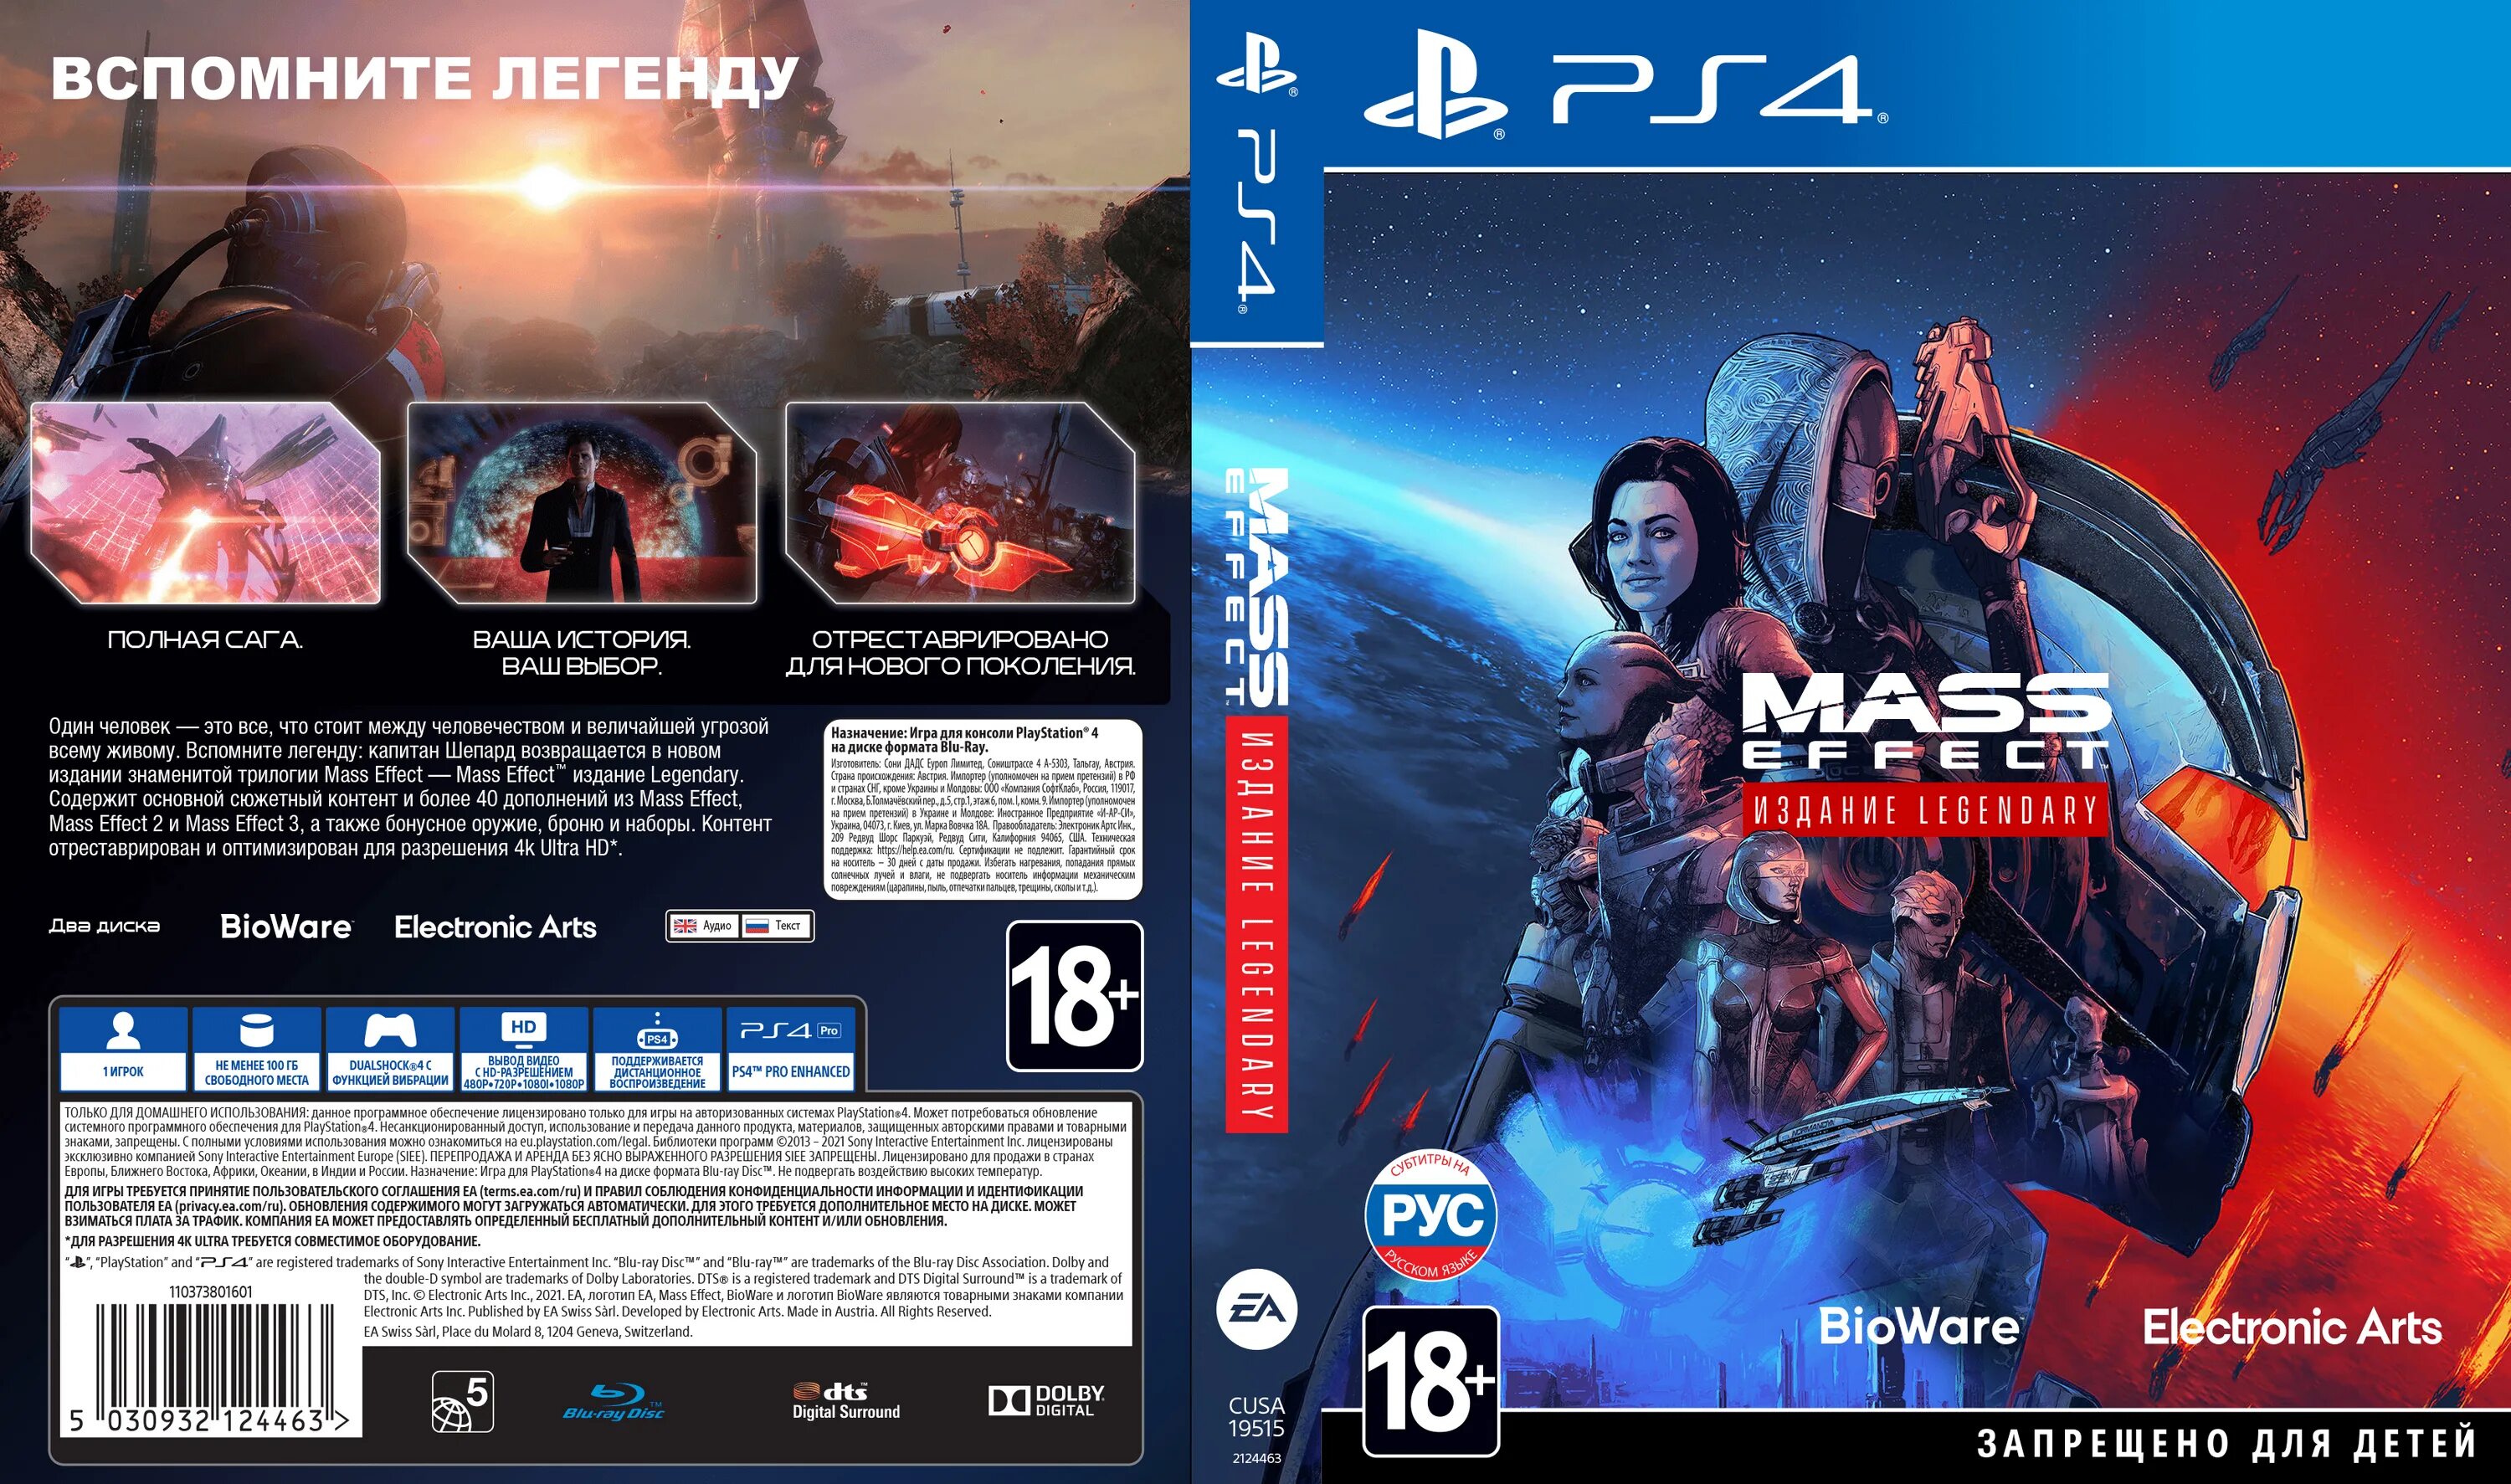 Mass Effect Legendary Edition обложка диска. Ps4 диск Mass Effect трилогия. Mass Effect Trilogy - Legendary Edition ps4. Диск ПС 4 Mass Effect.